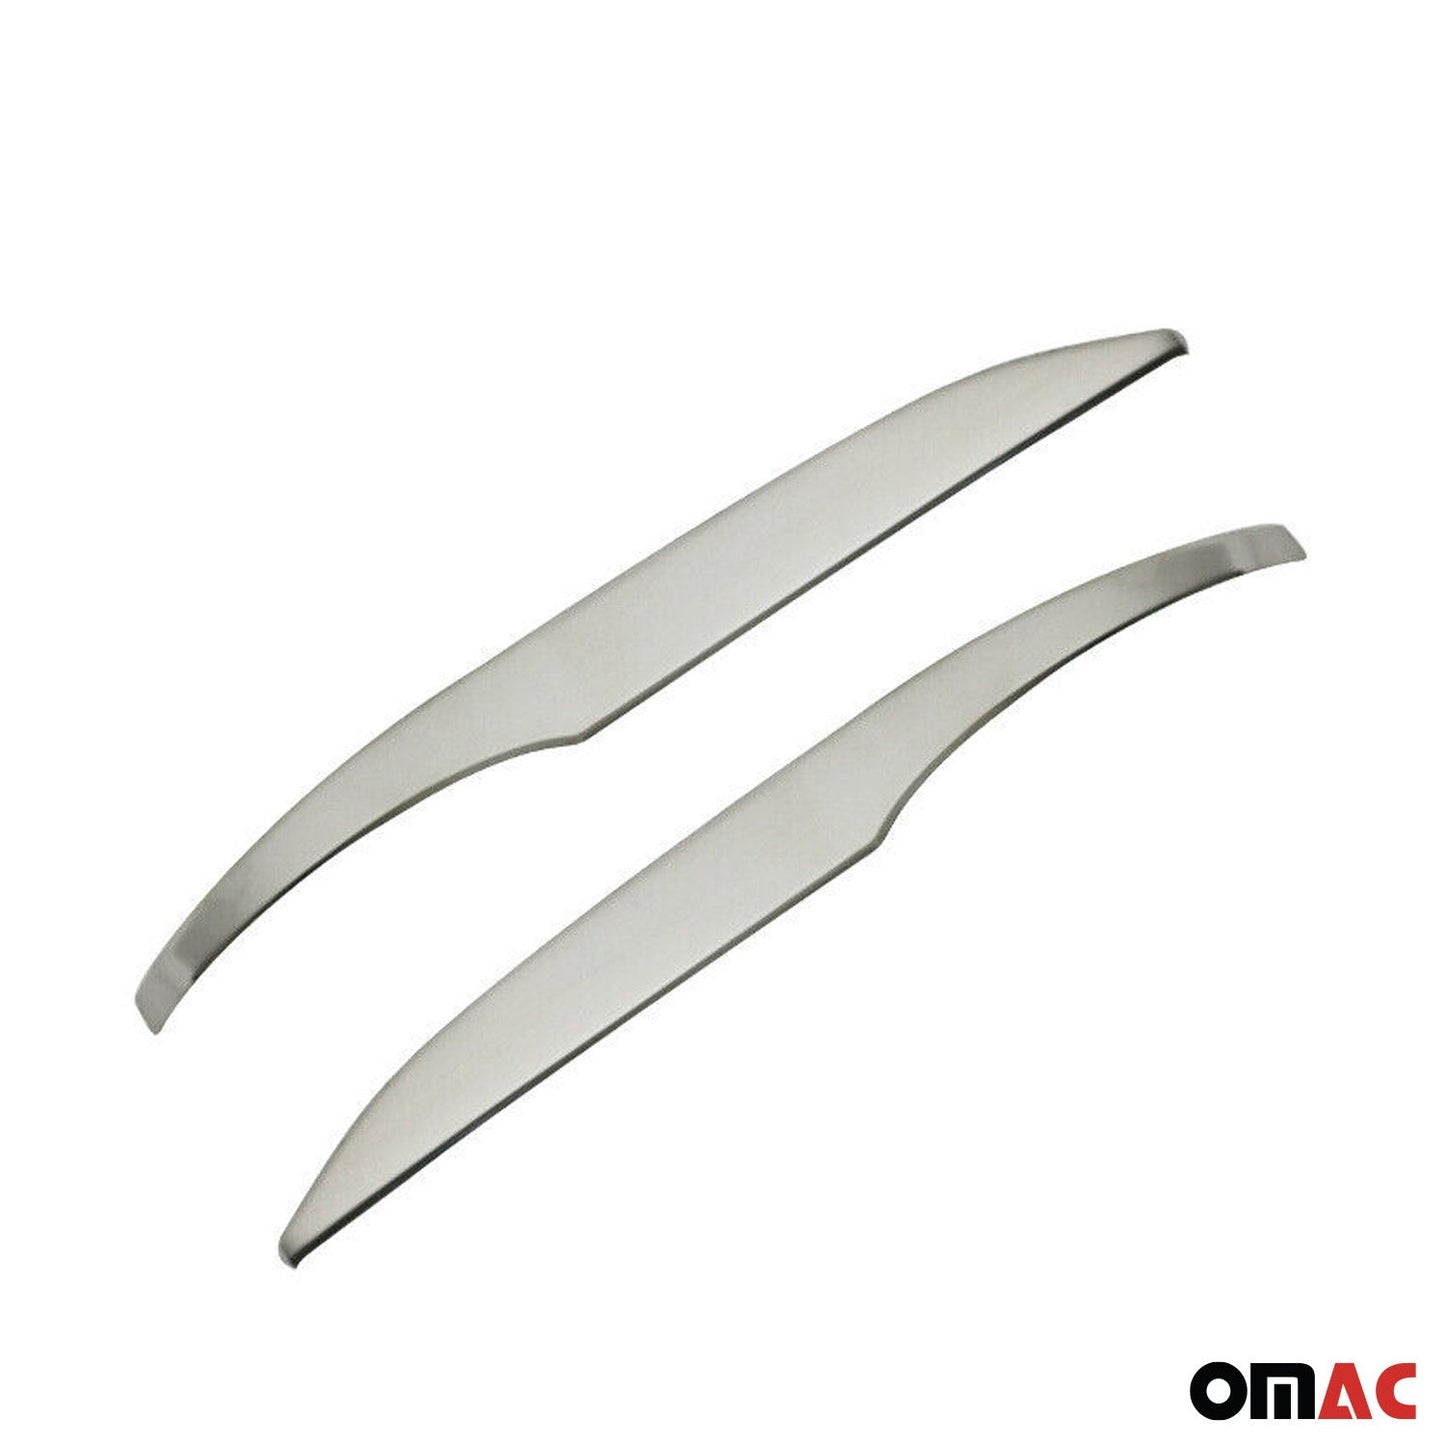 OMAC Side Mirror Cover Caps Fits Toyota RAV4 2013-2018 Steel Silver 2 Pcs 7019115